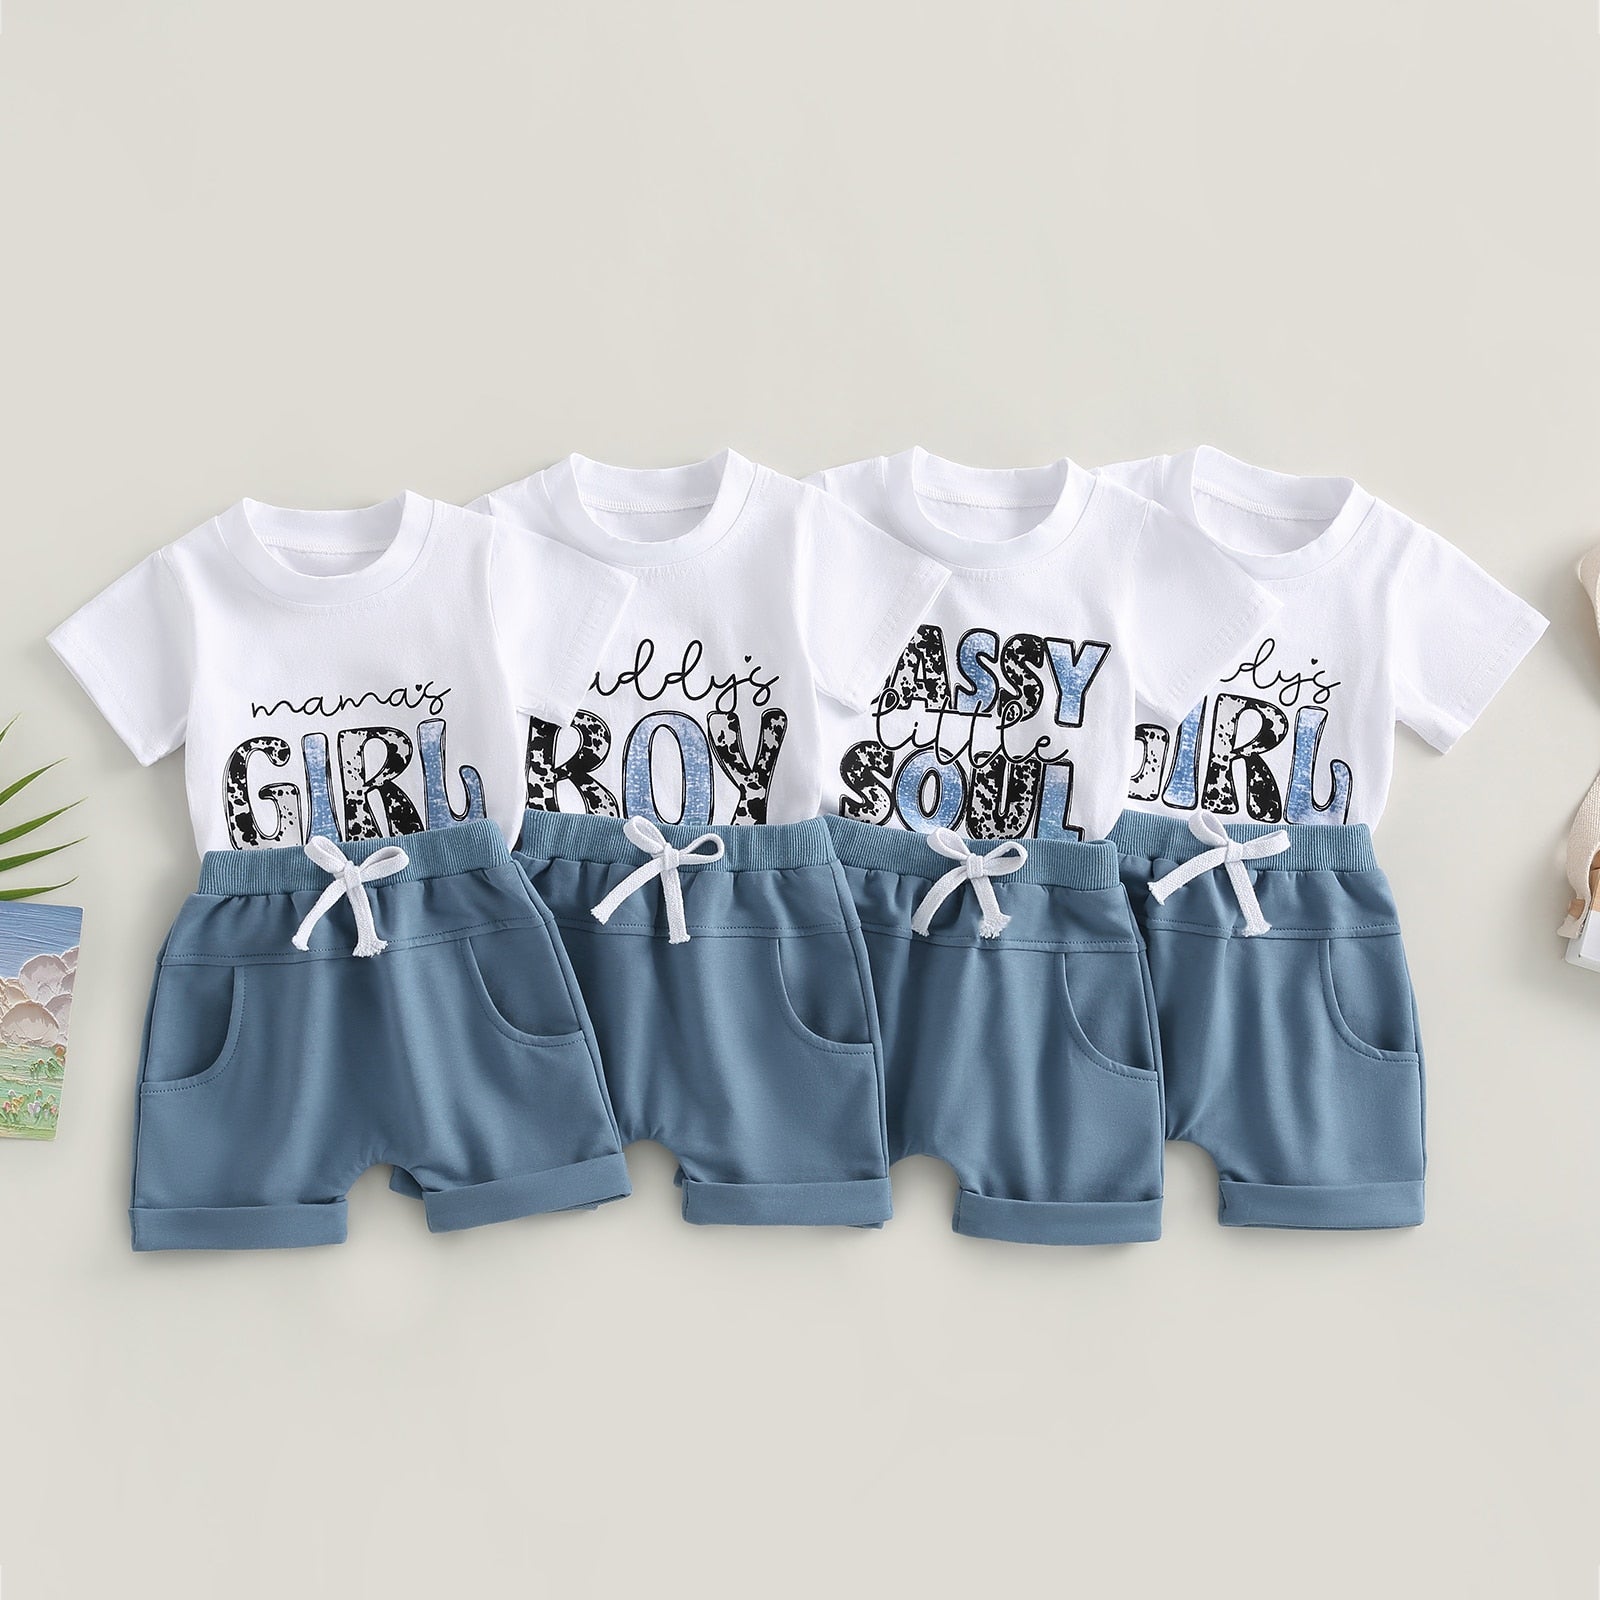 Funny Baby Shower T Shirt, Cool Kids Tshirt, Sassy Little Soul T